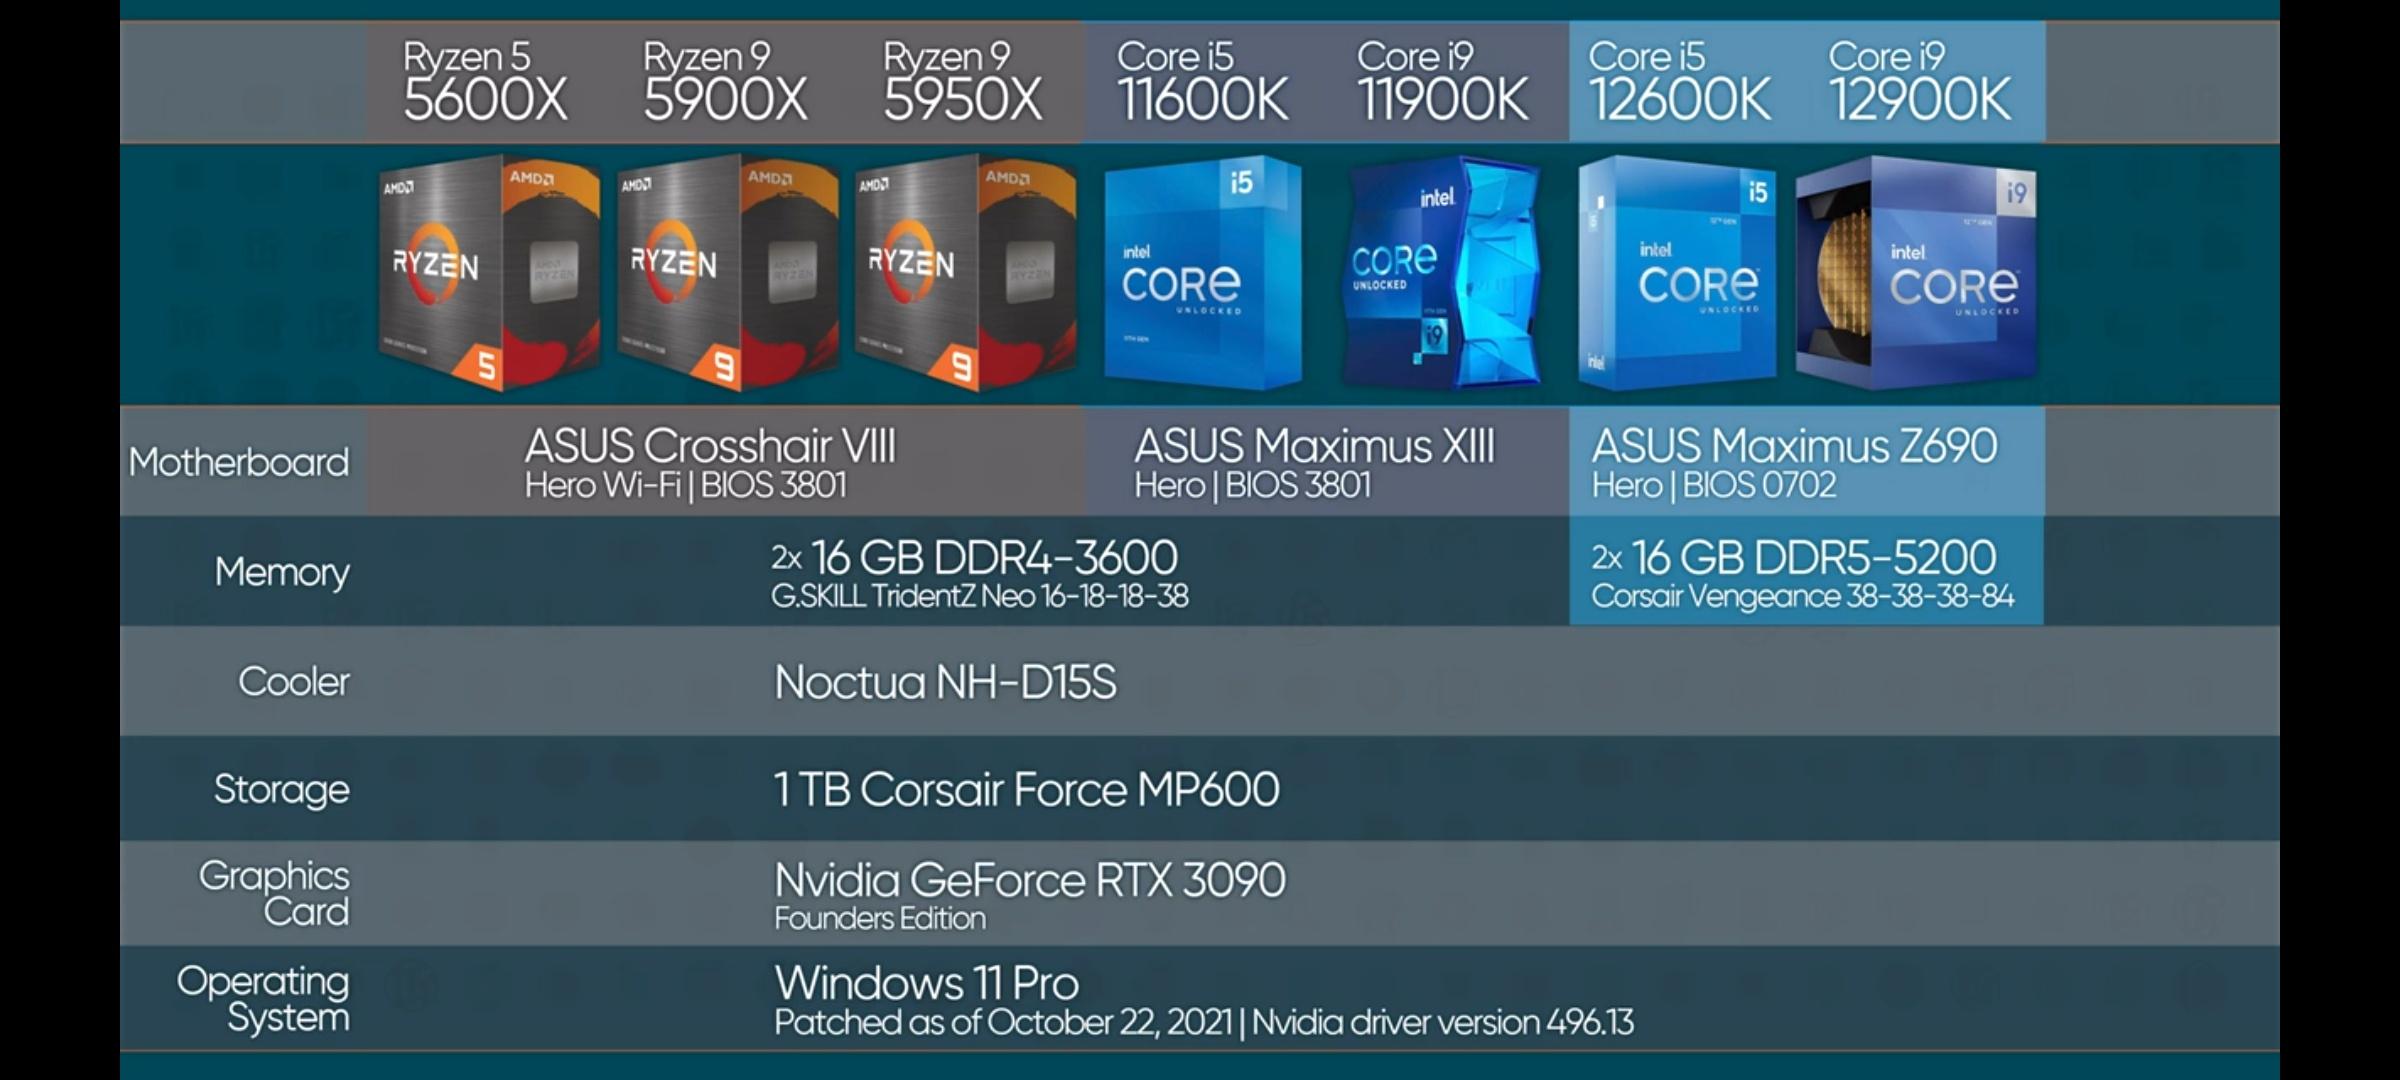 Intel Core i5-12600K Review - Winning Price/Performance - Power